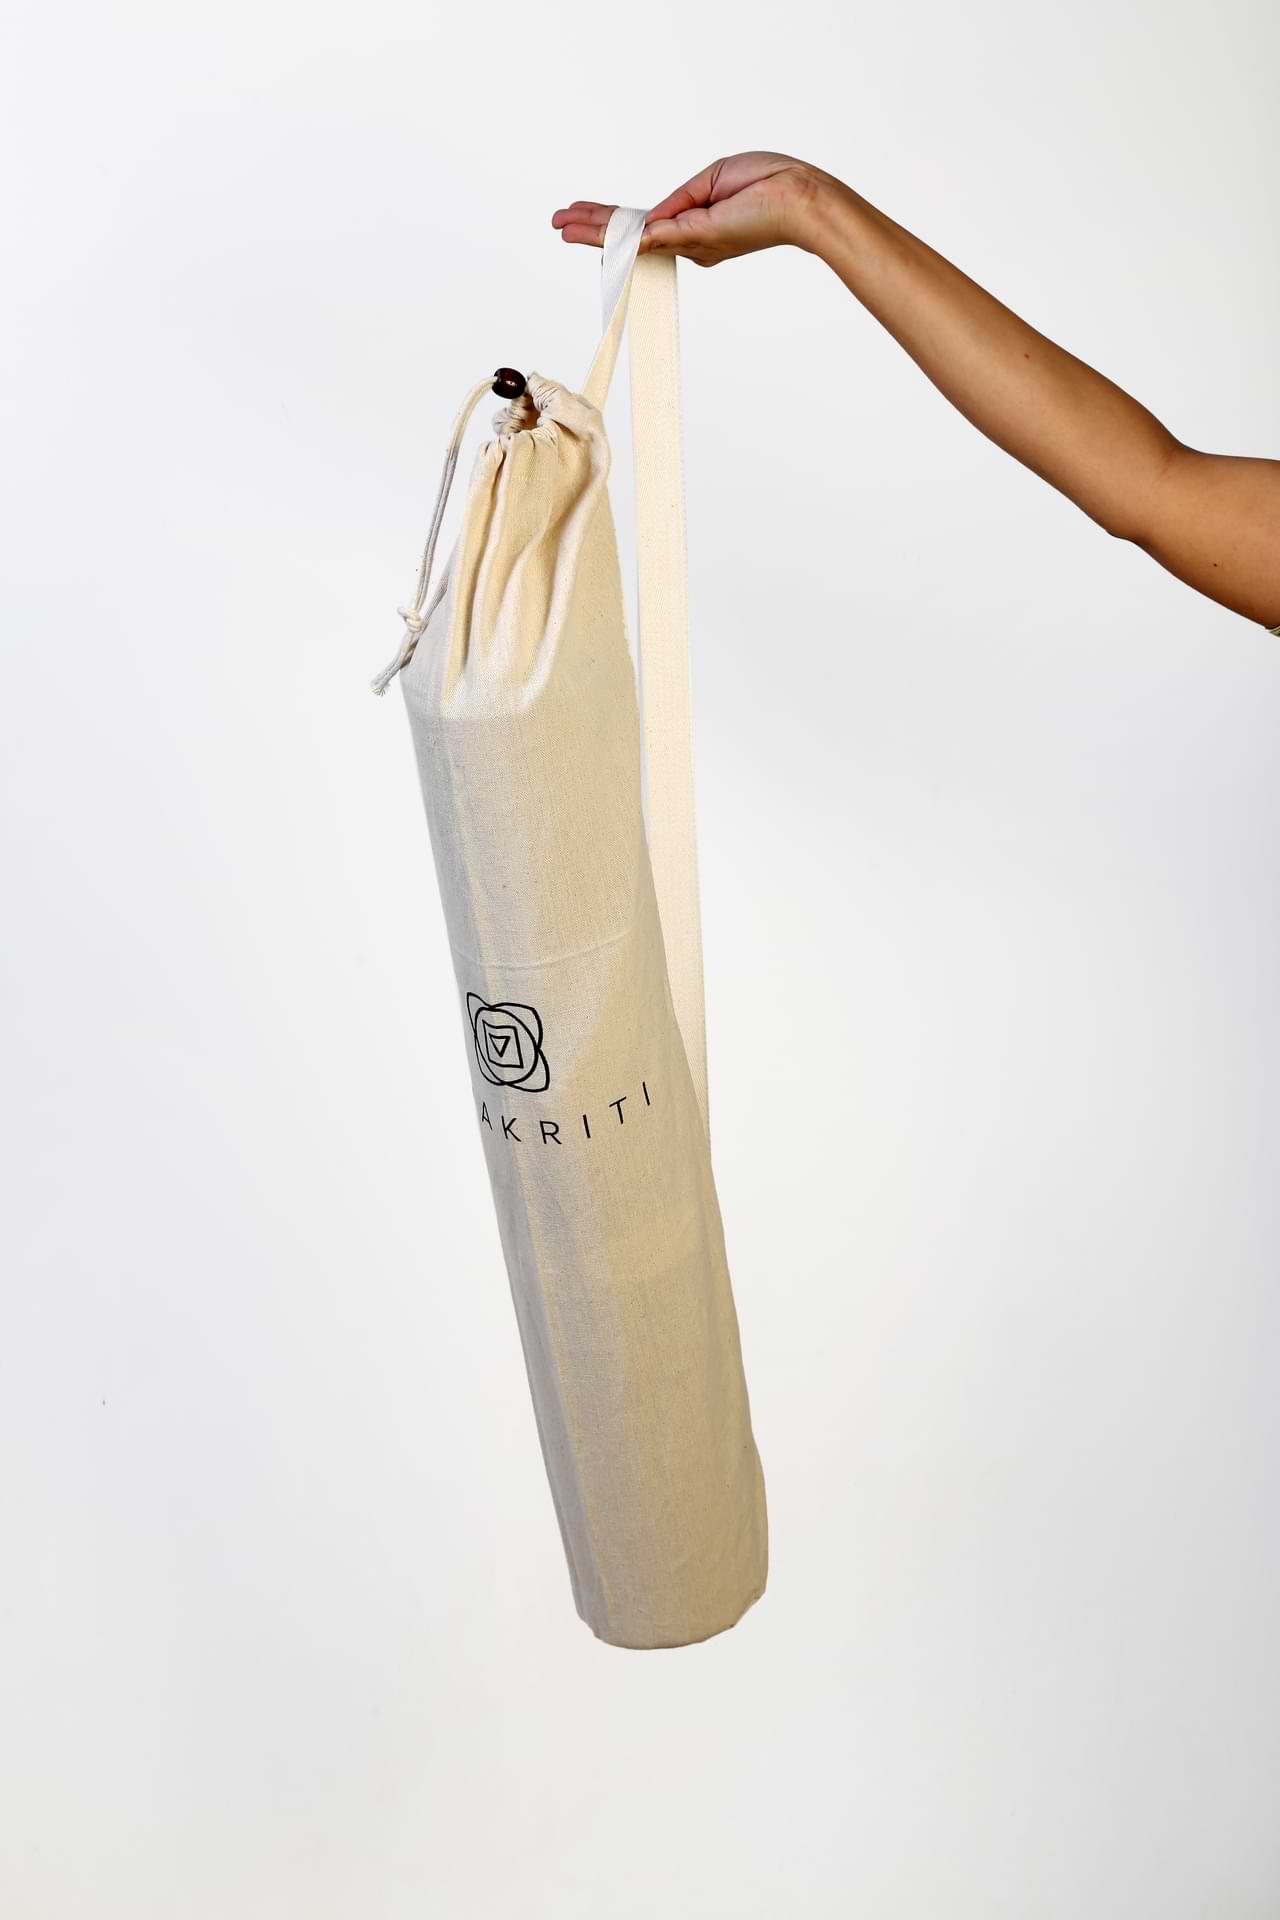 Prakriti Drawstring Yoga Mat Bag